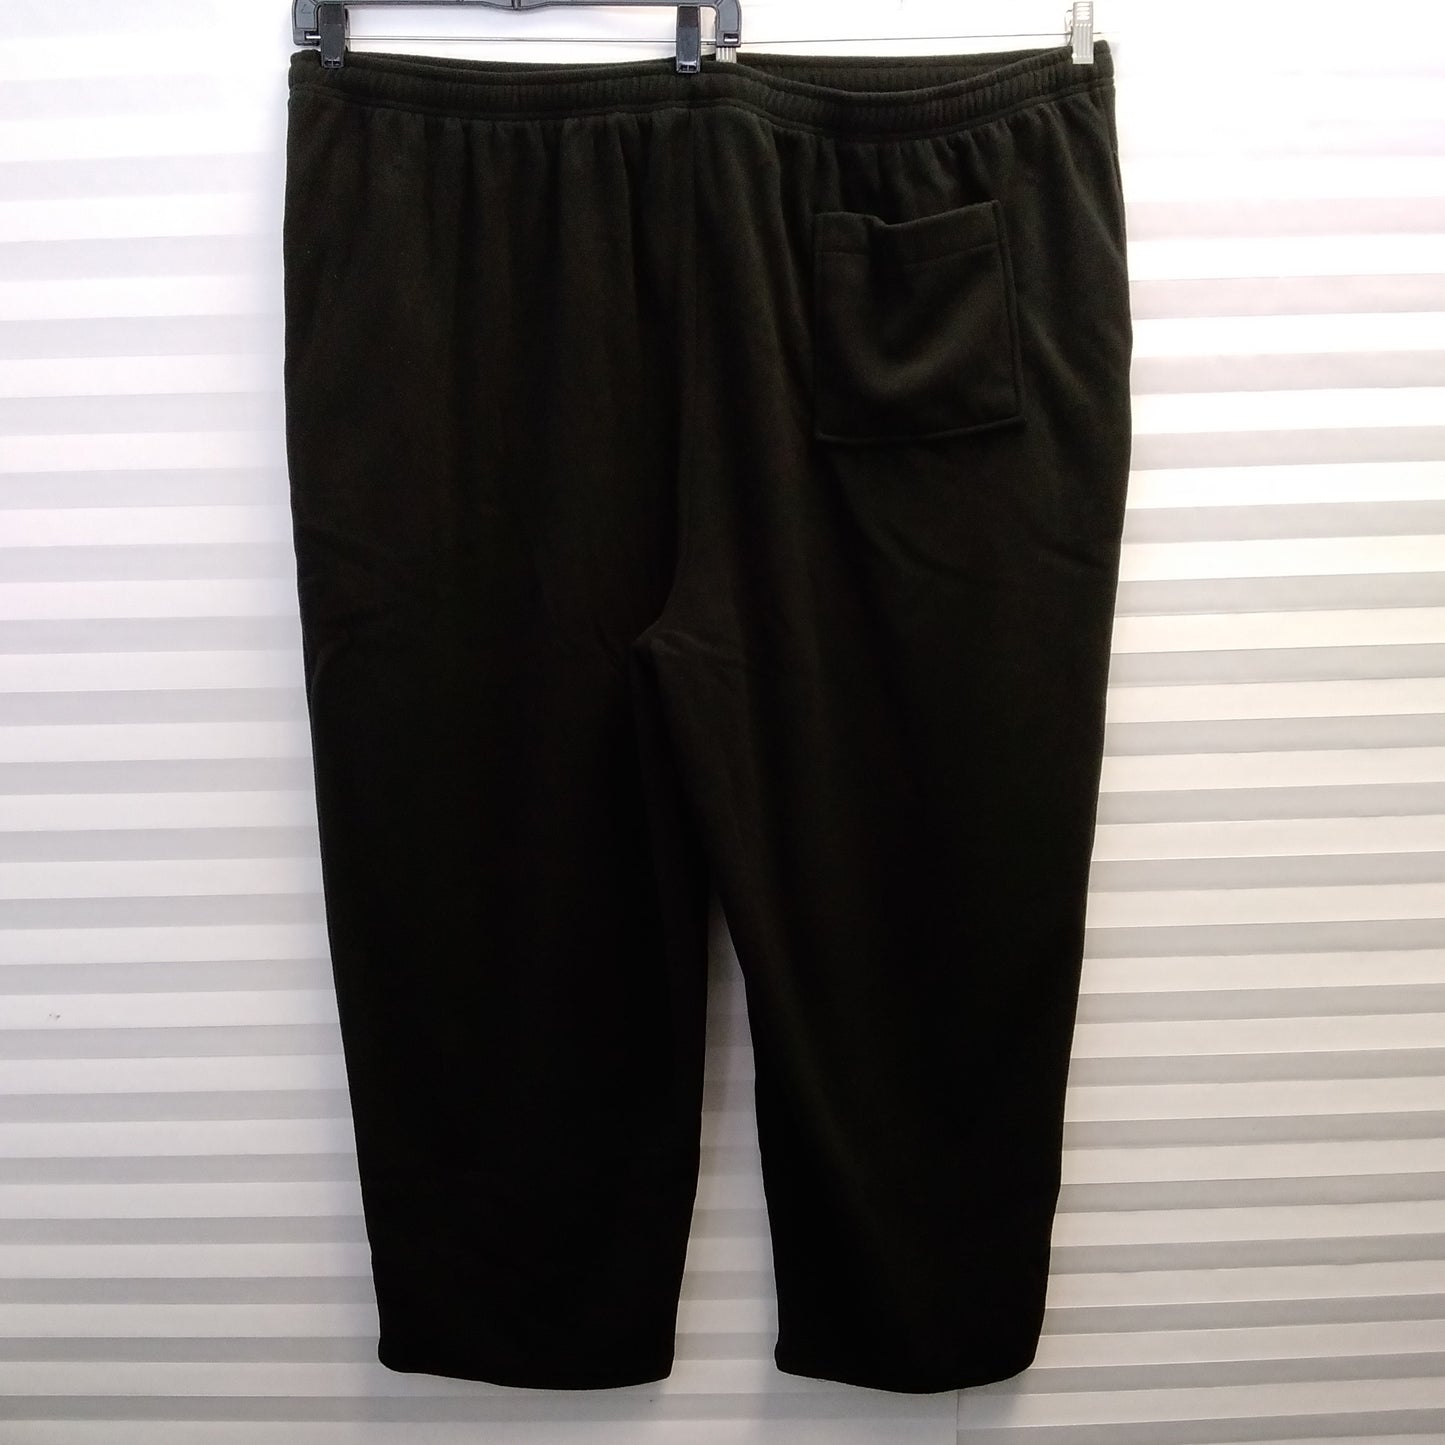 Kingsize Black Sweatpants - Men's 5XL Big